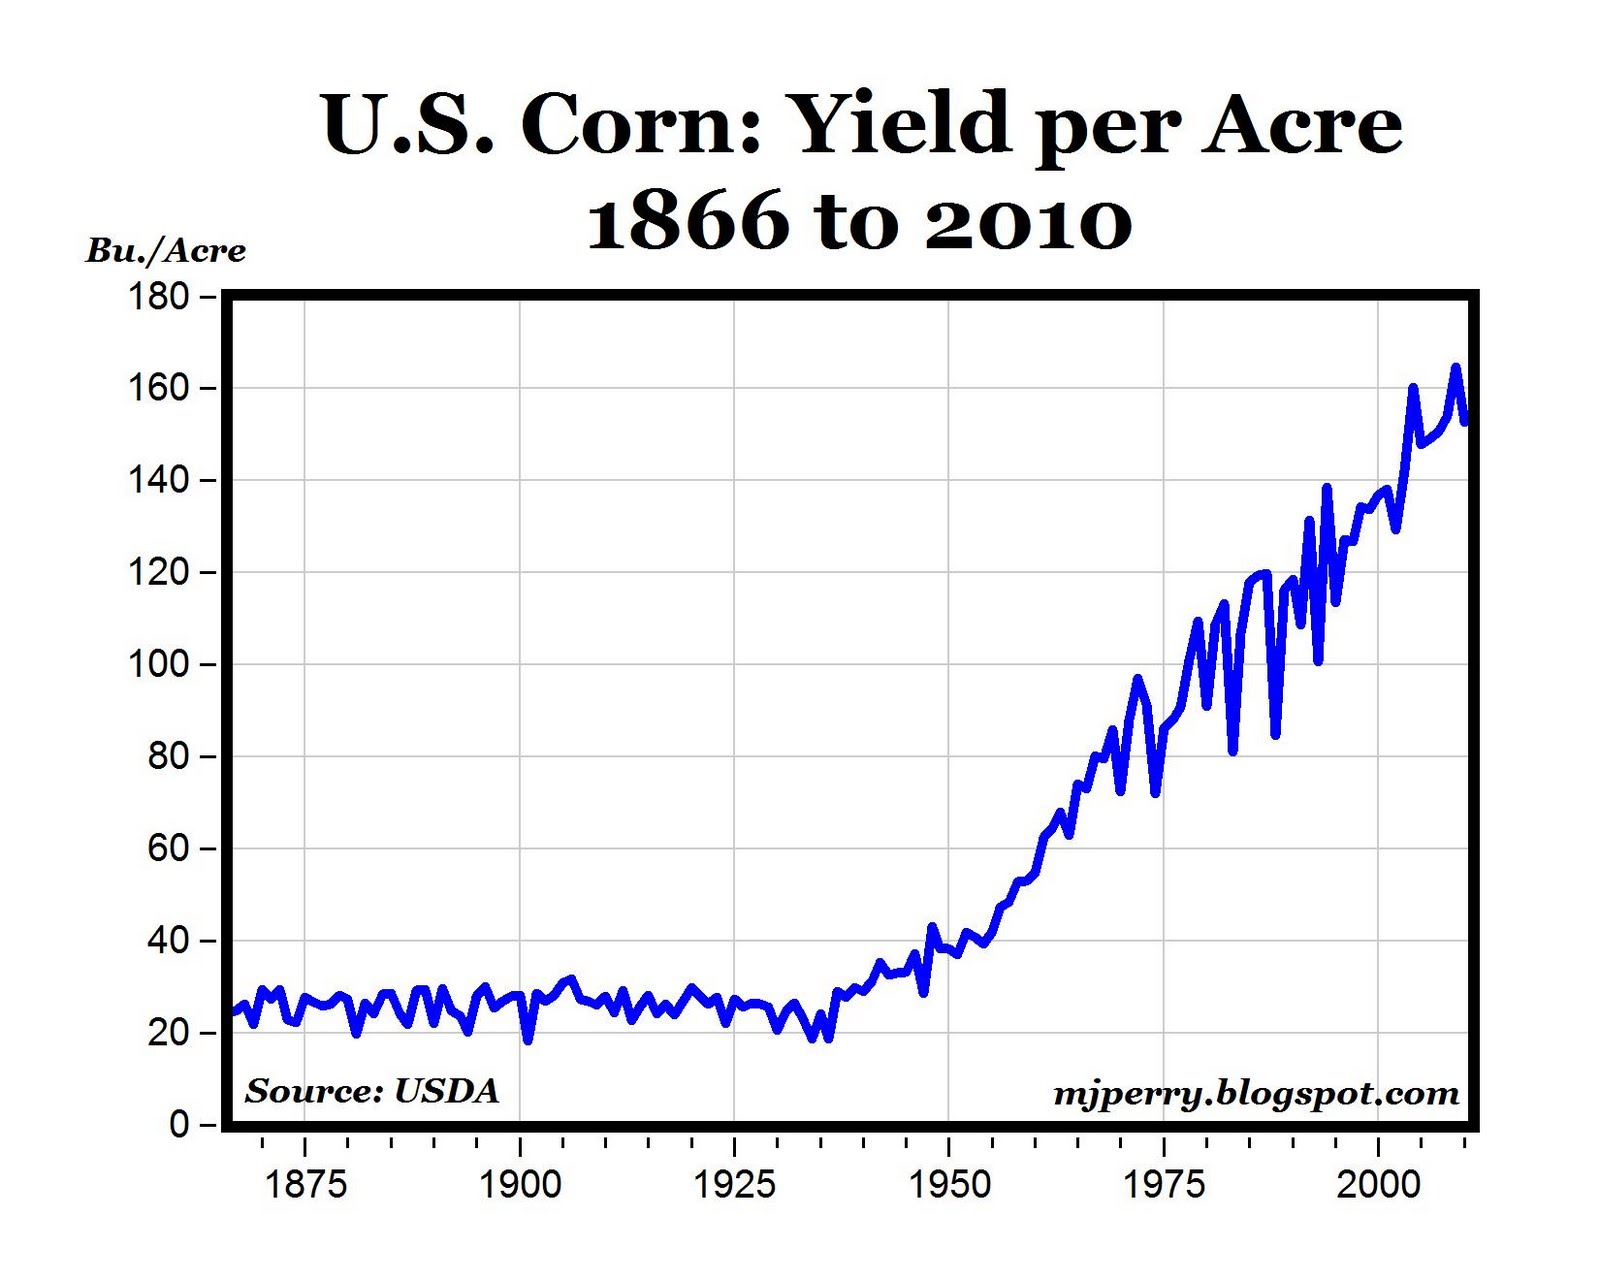 Corn Grading Chart